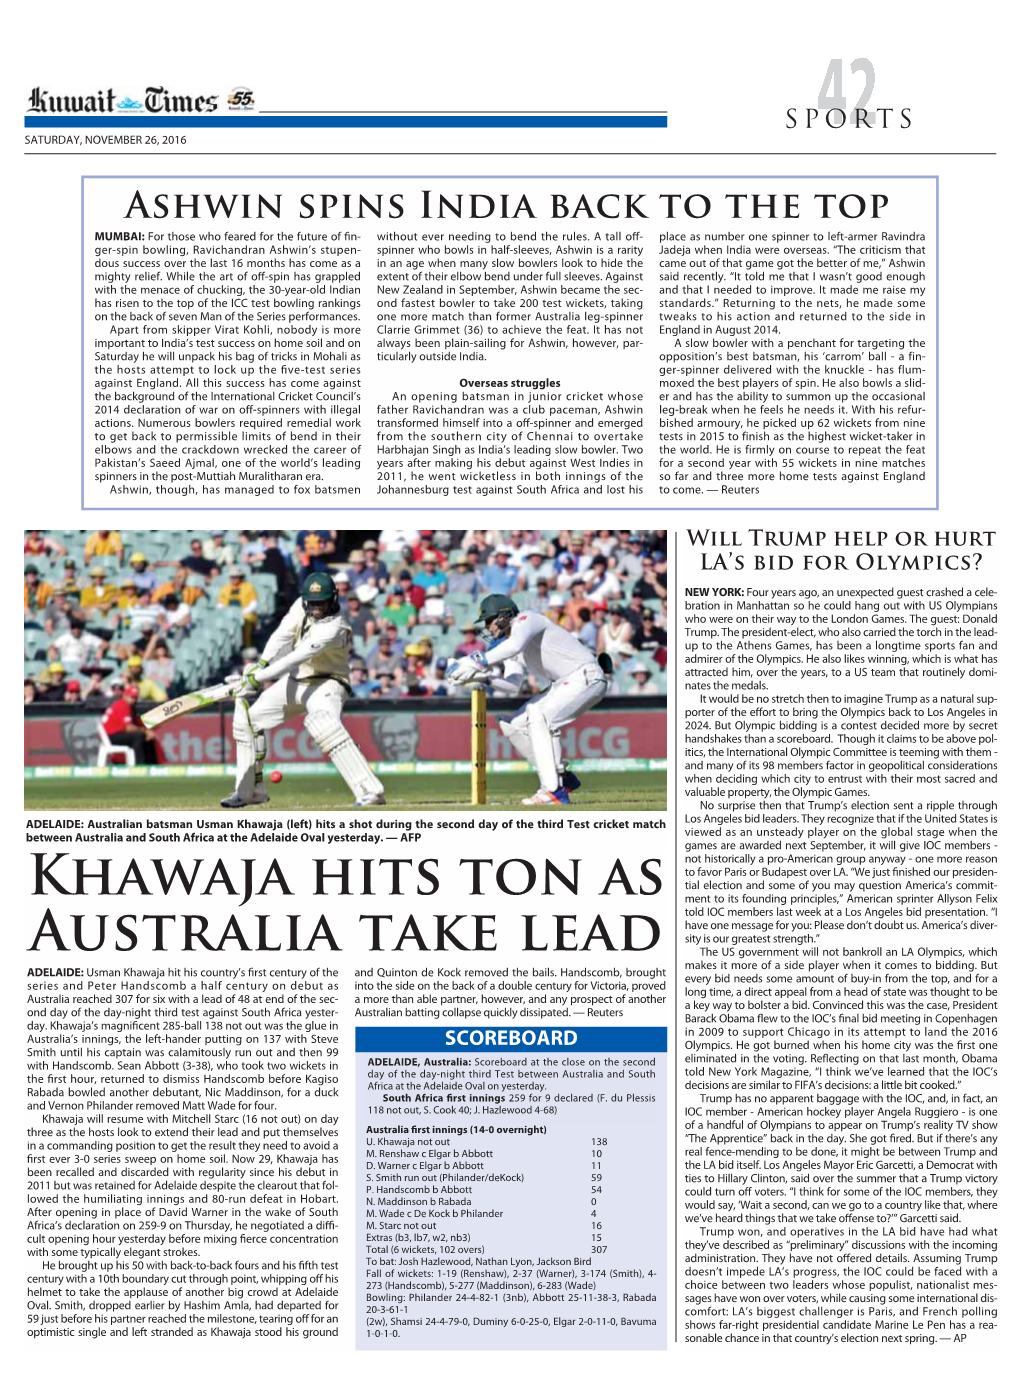 Khawaja Hits Ton As Australia Take Lead